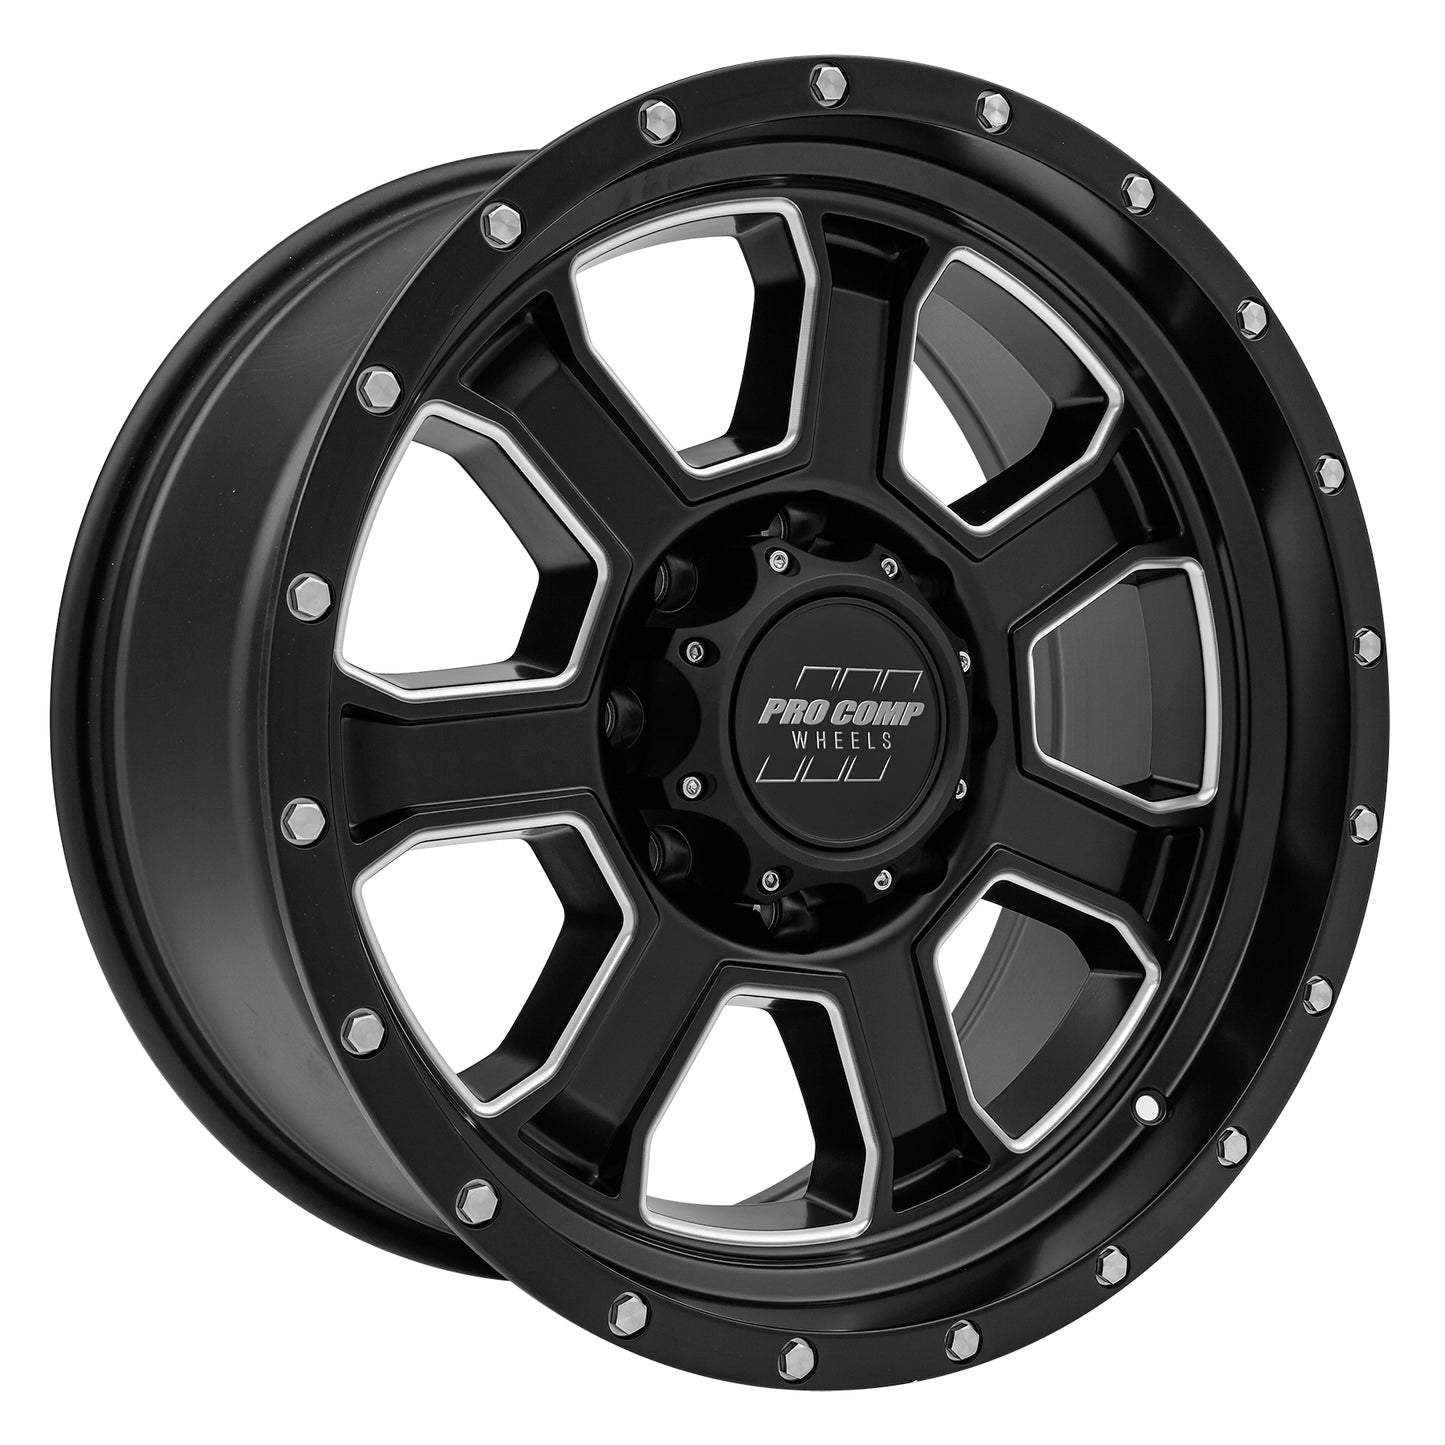 Pro Comp Wheels Sledge Satin Black Milled 20X9 8x6.5 5BS Offset 0mm Cap P/N 503451501 5143-2982